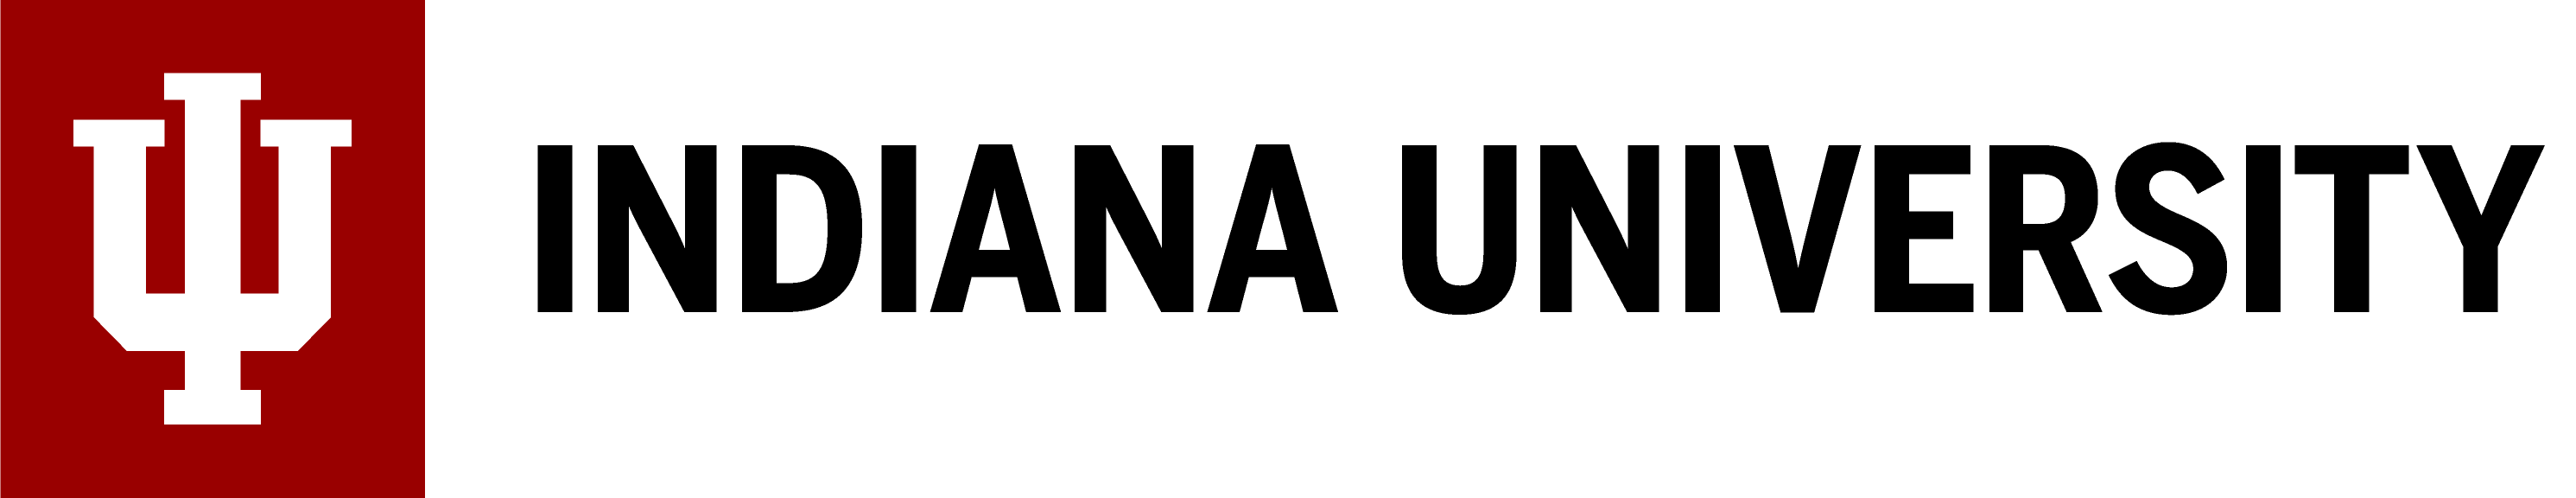 IUPUI Logo - Pressbooks